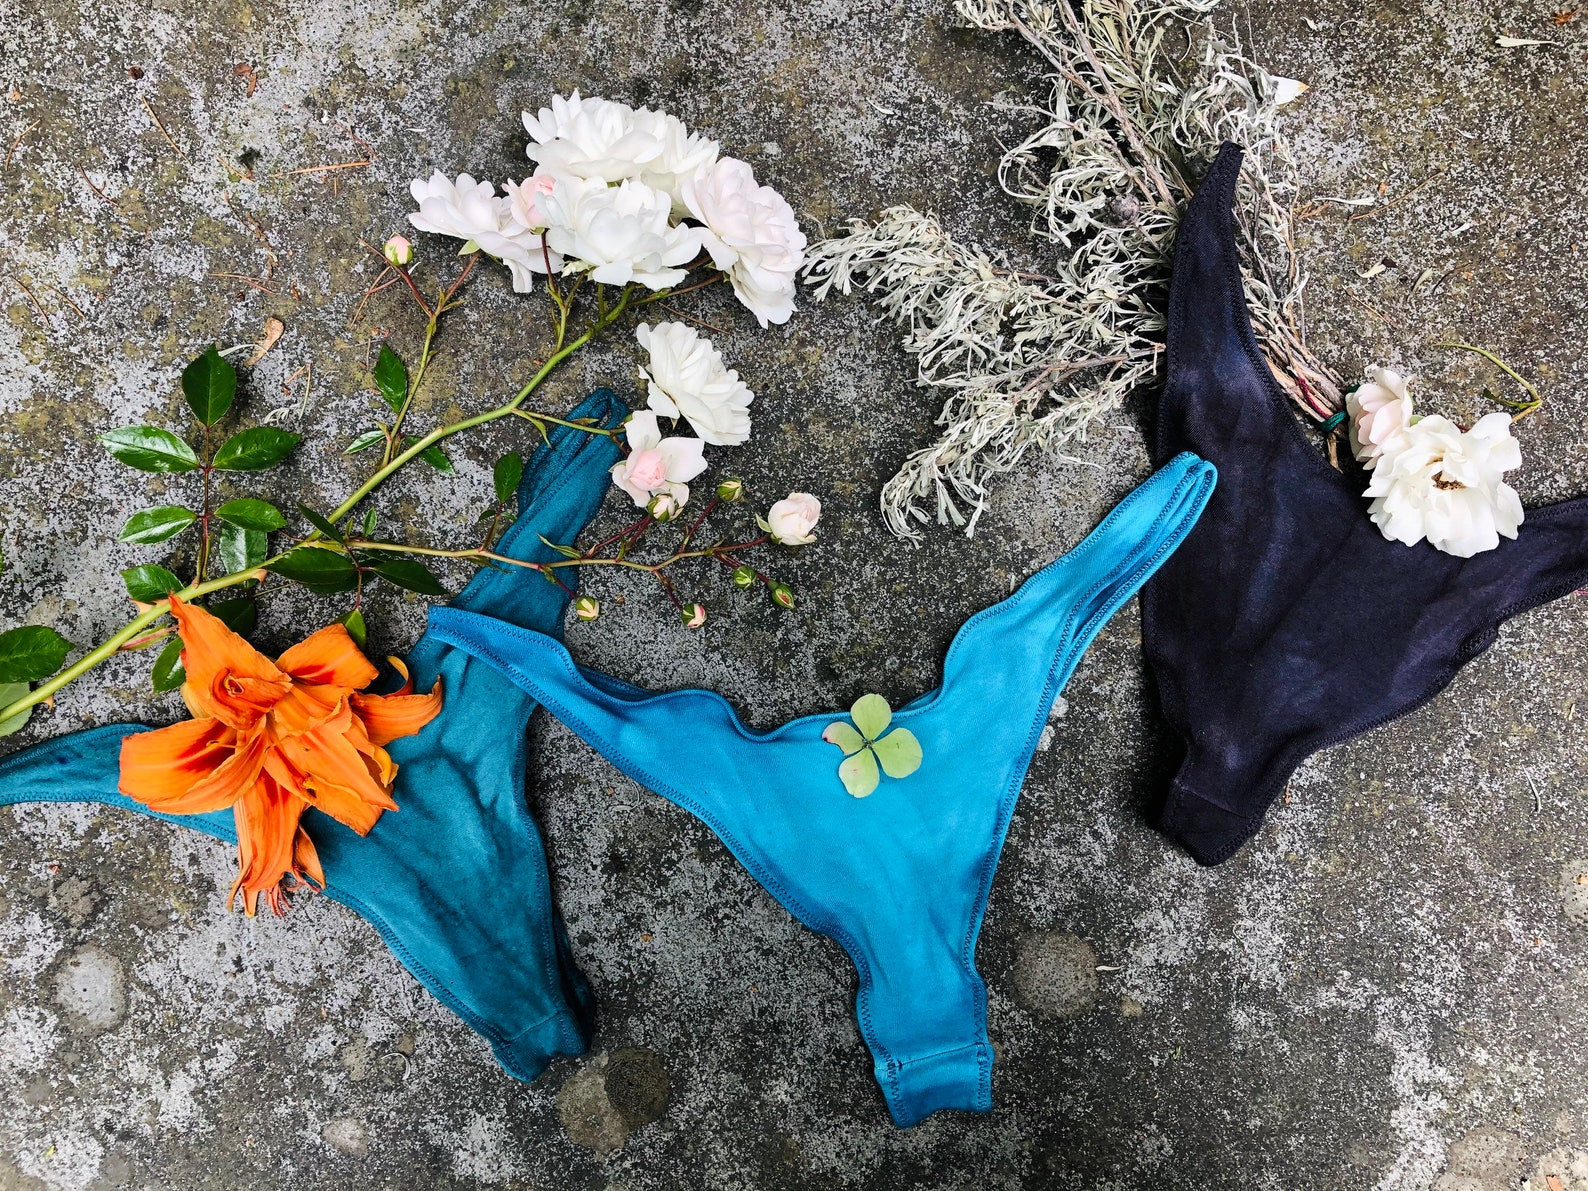 Tanga Bamboo Undies/ Cheeky panty Organic Underwear – RasApparel